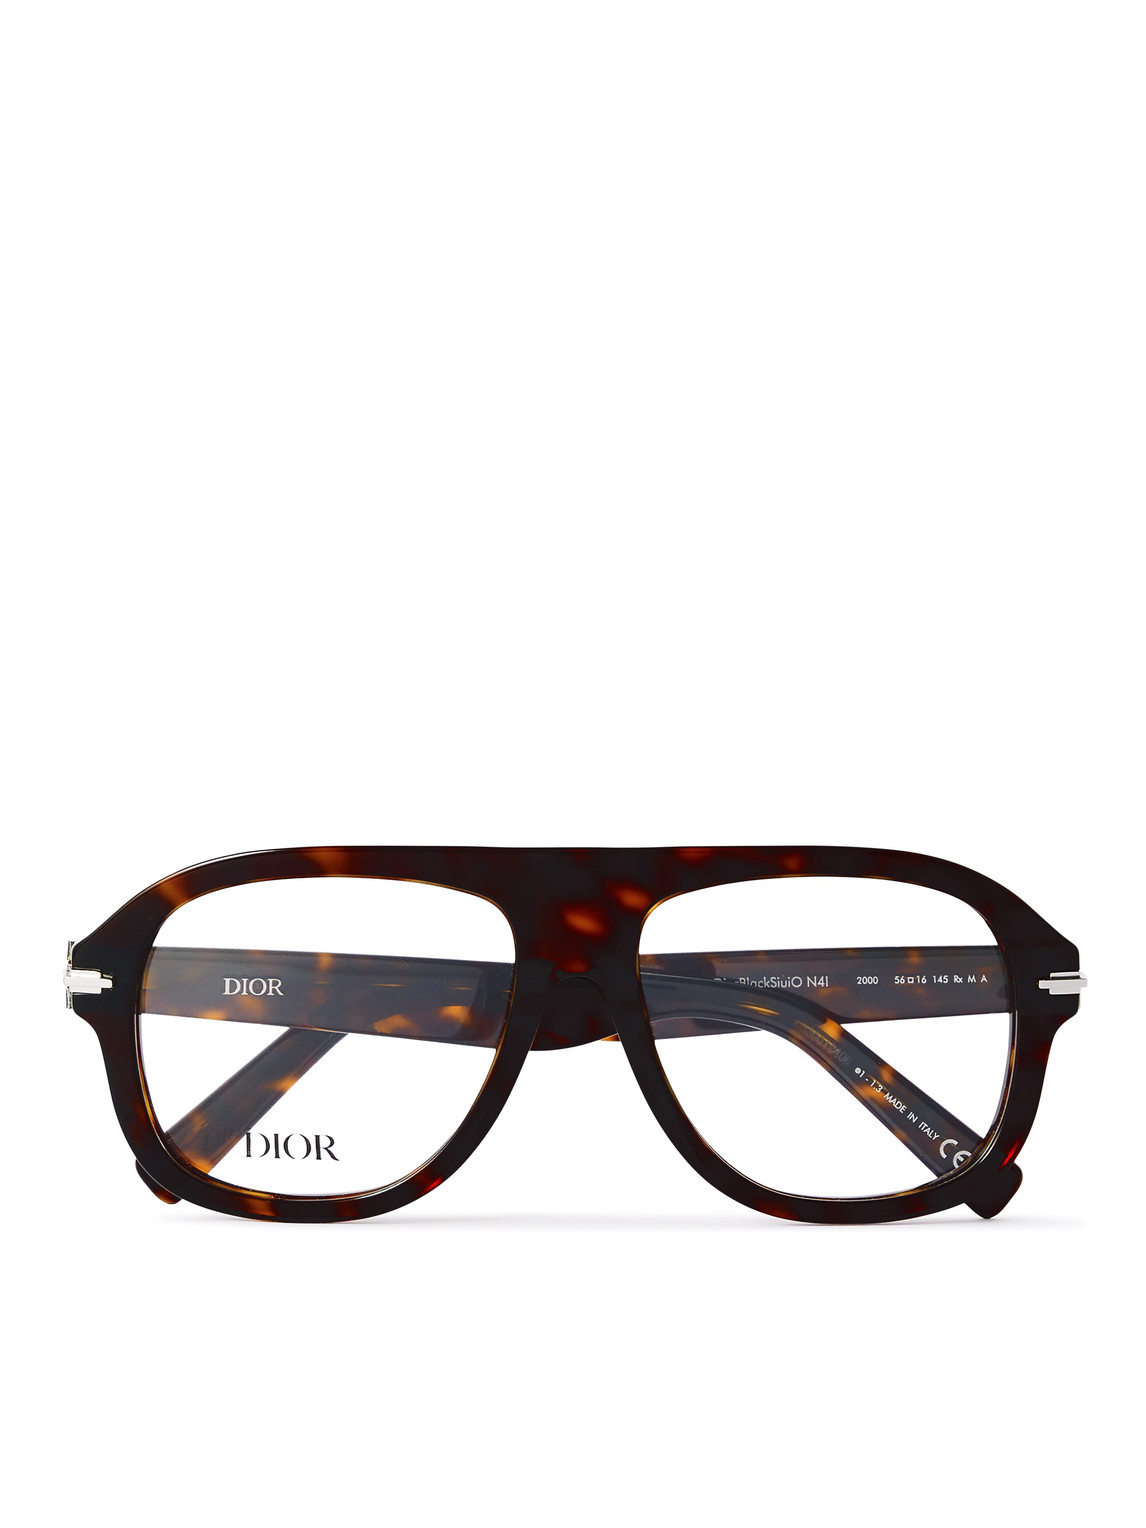 Blacksuit Tortoiseshell Acetate and Silver-Tone Aviator-Style Optical Glasses